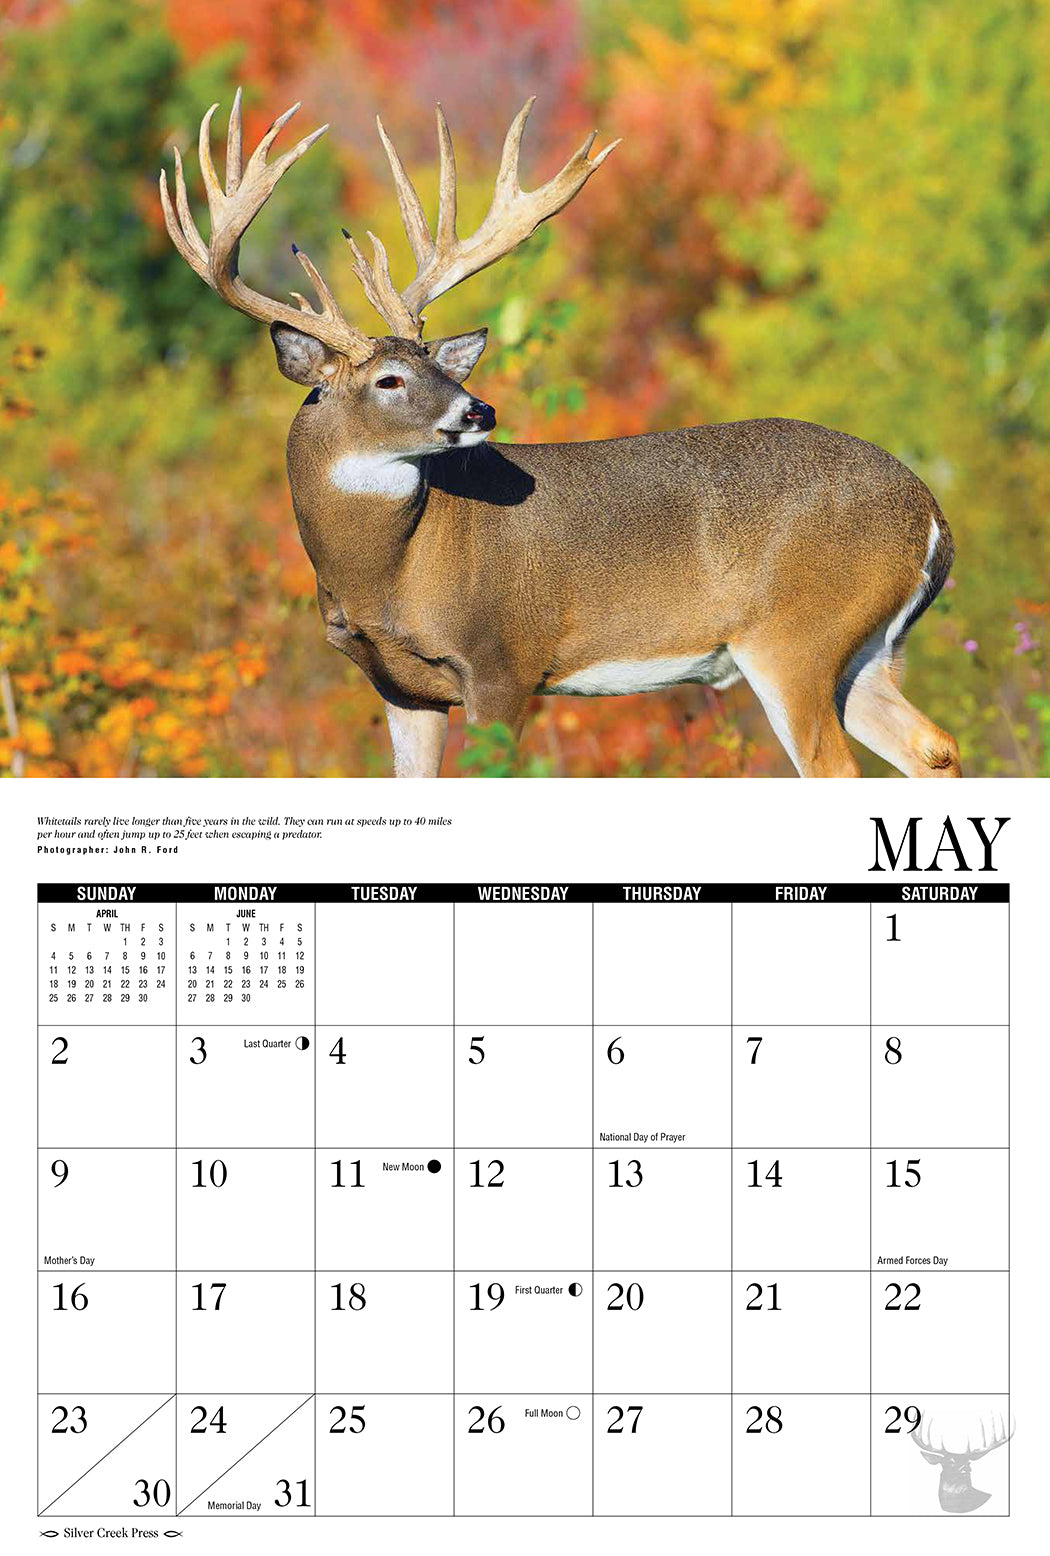 2021 Whitetail Deer Calendar Silver Creek Press